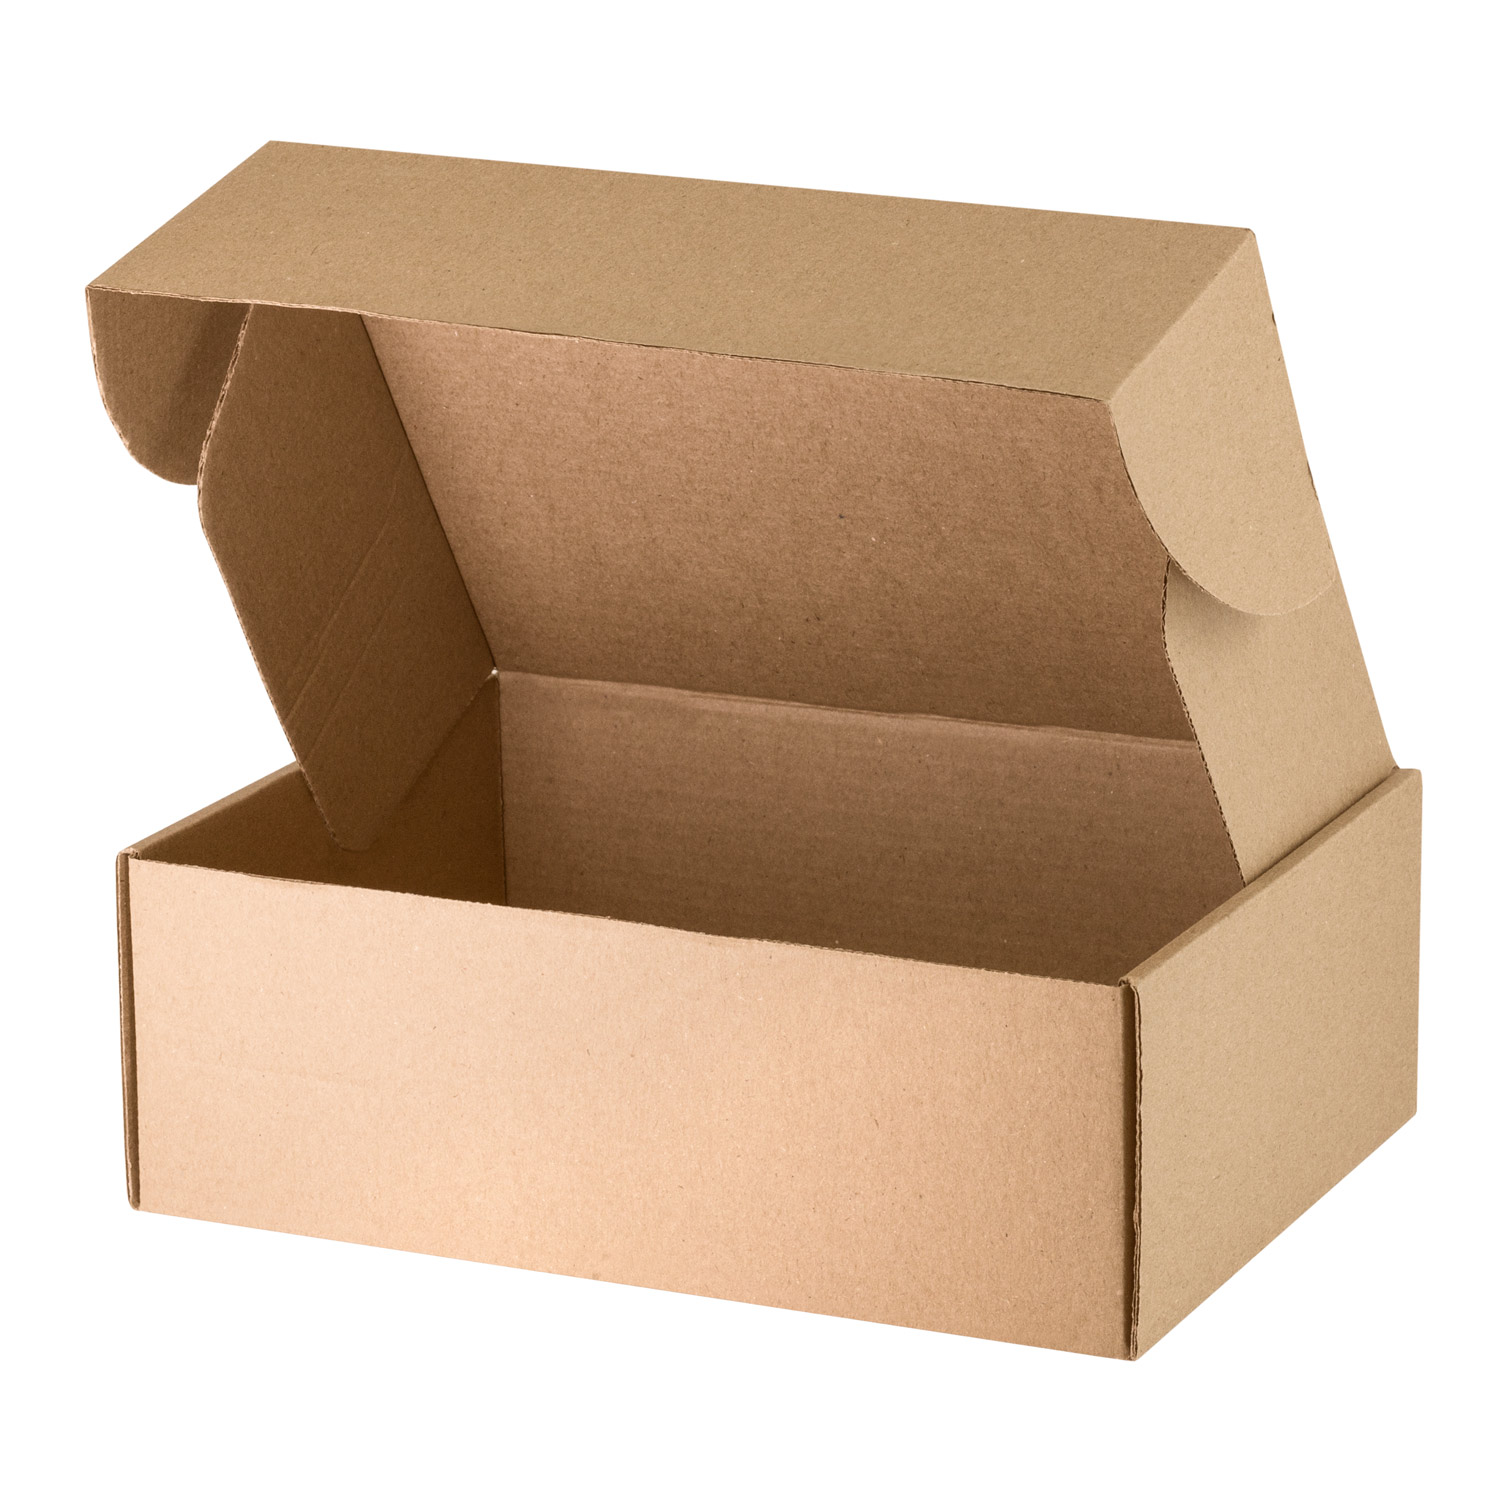 Артикул: A20102021.01 — Подарочная коробка для набора универсальная, крафт, 230*170*80 мм